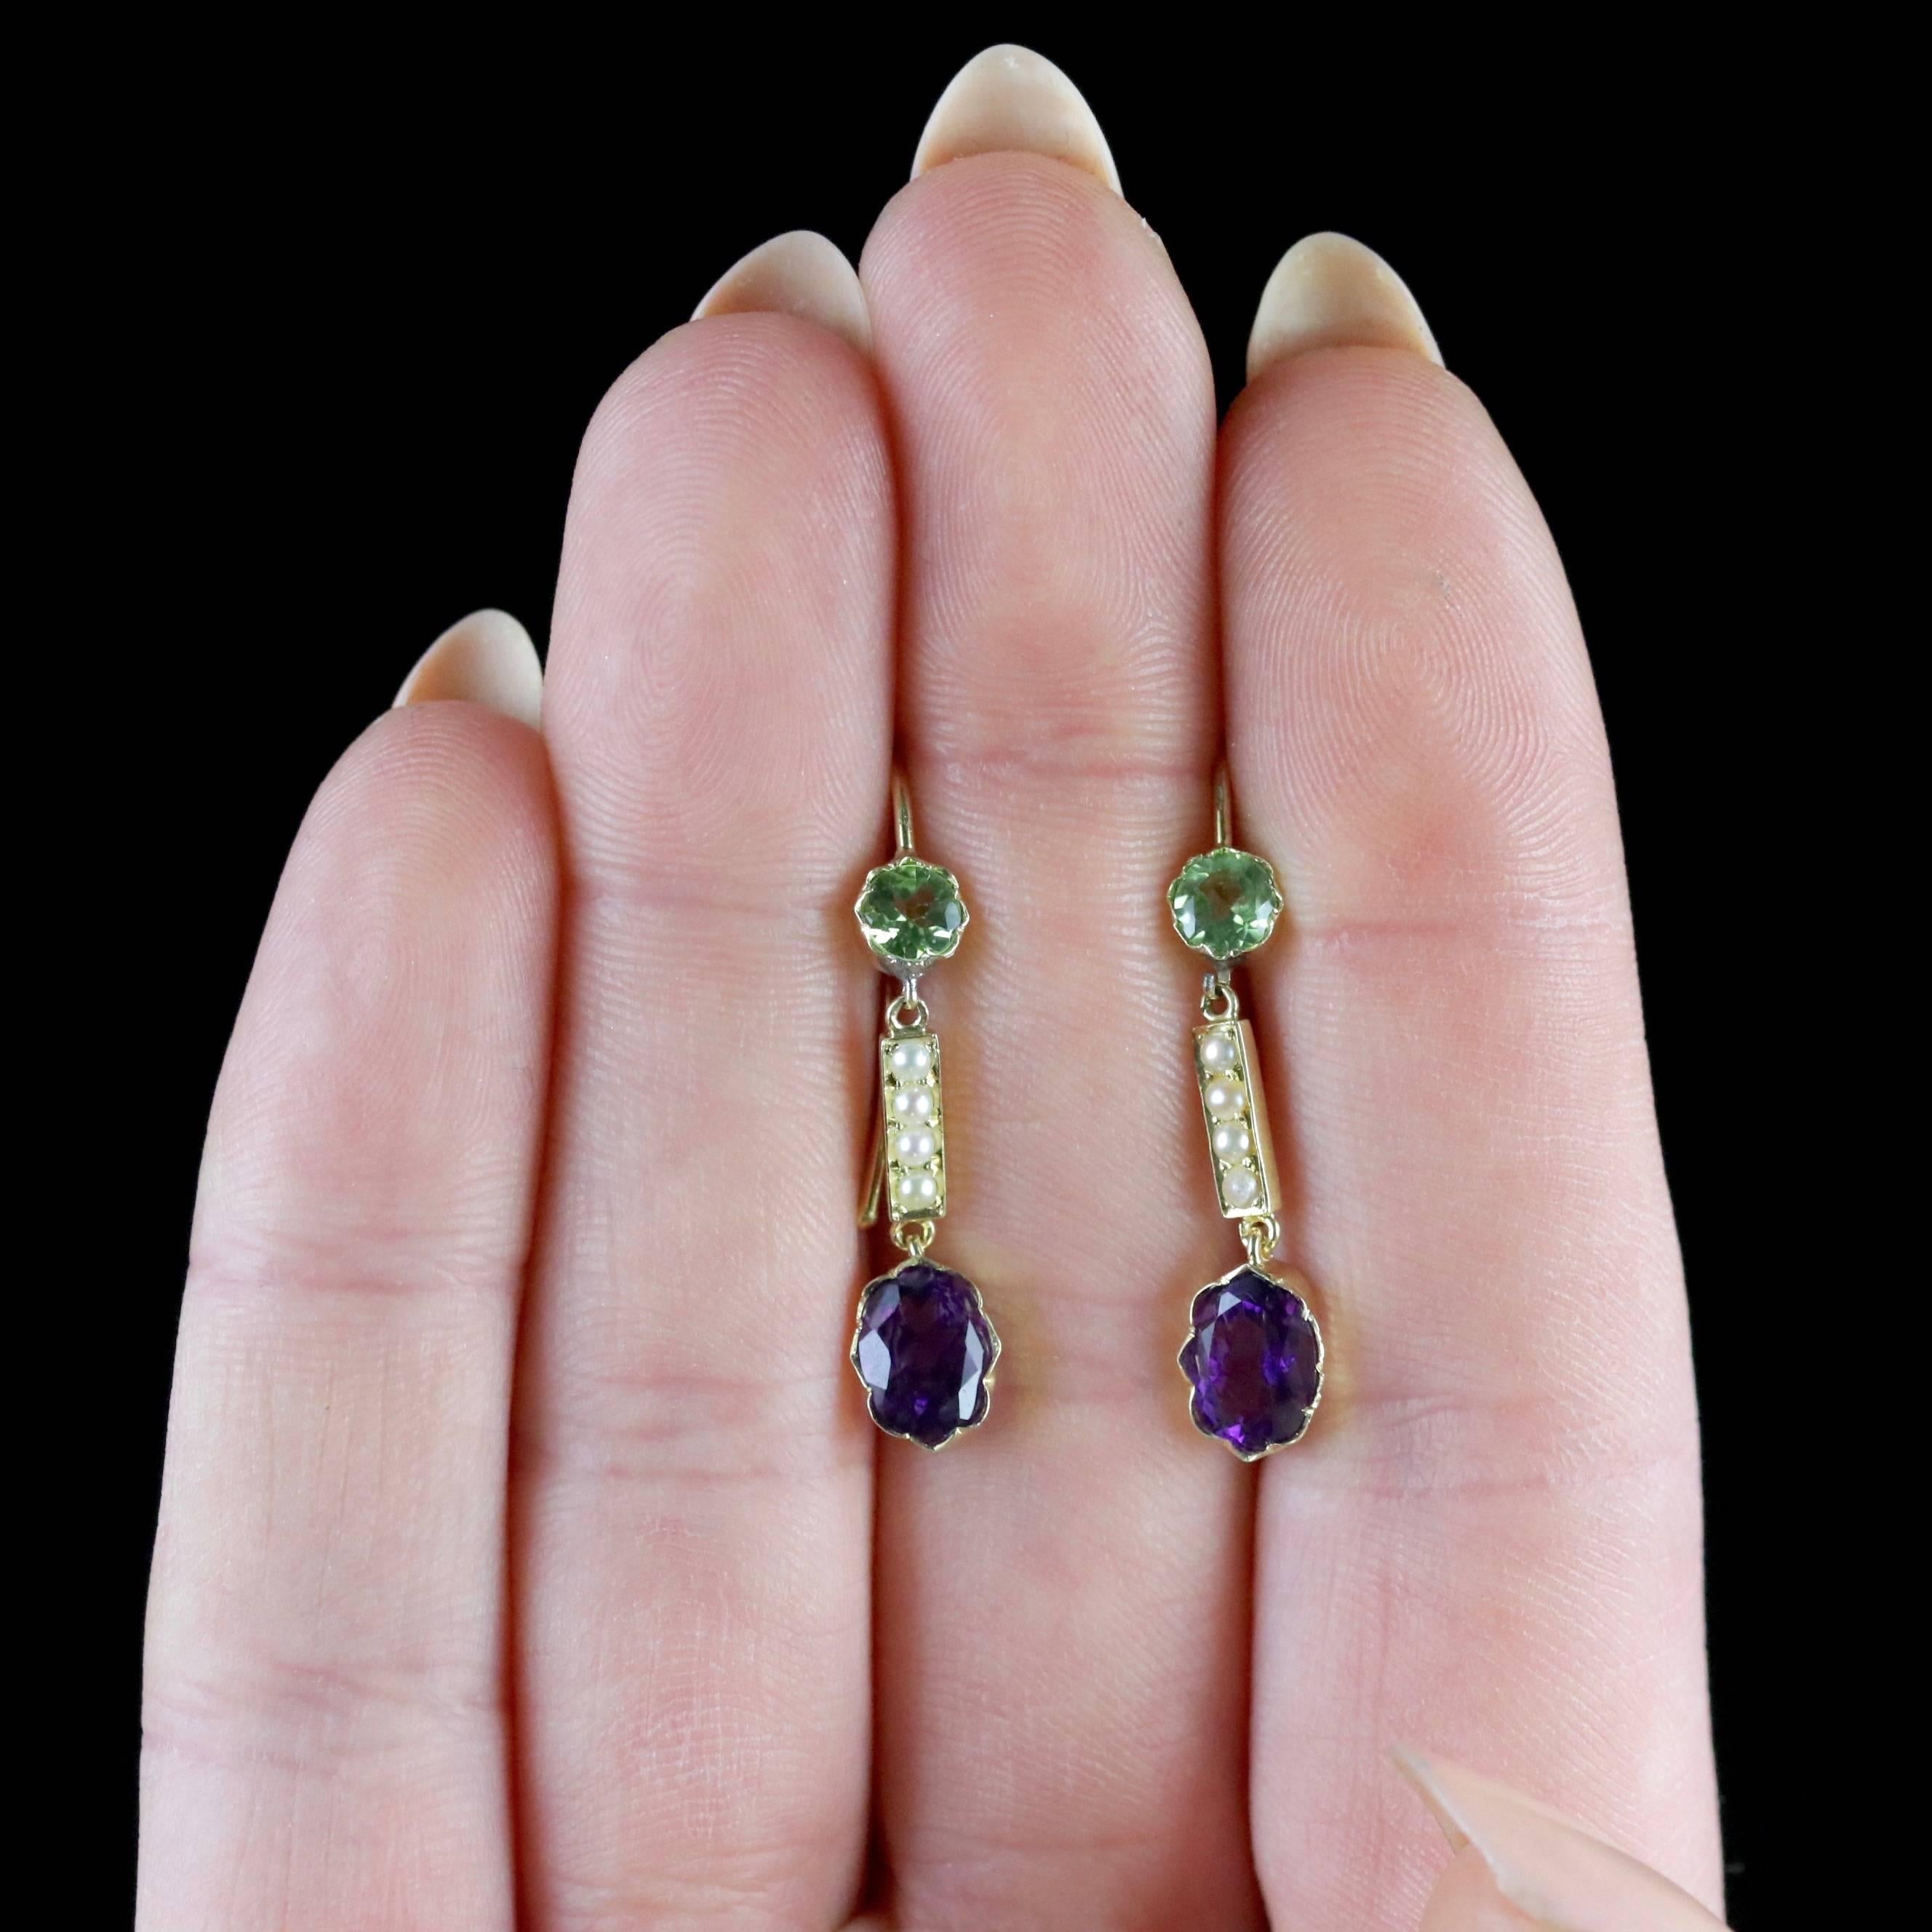 Antique Victorian Suffragette Earrings 15 Carat Gold Amethyst Peridot Pearls 2